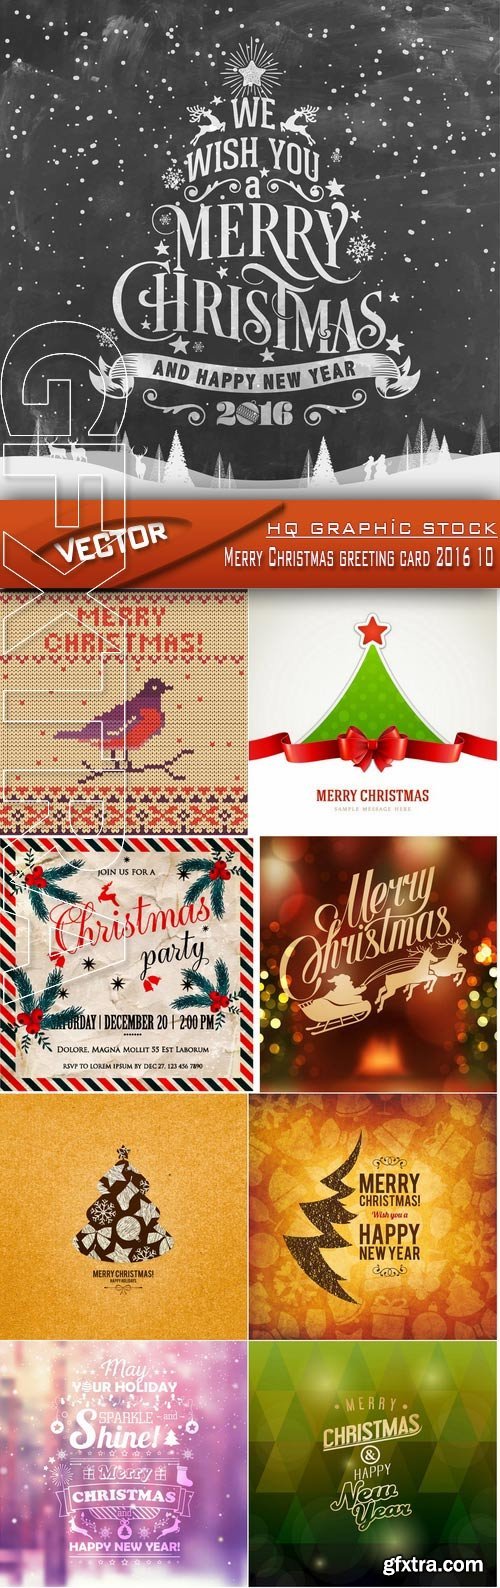 Stock Vector - Merry Christmas greeting card 2016 10